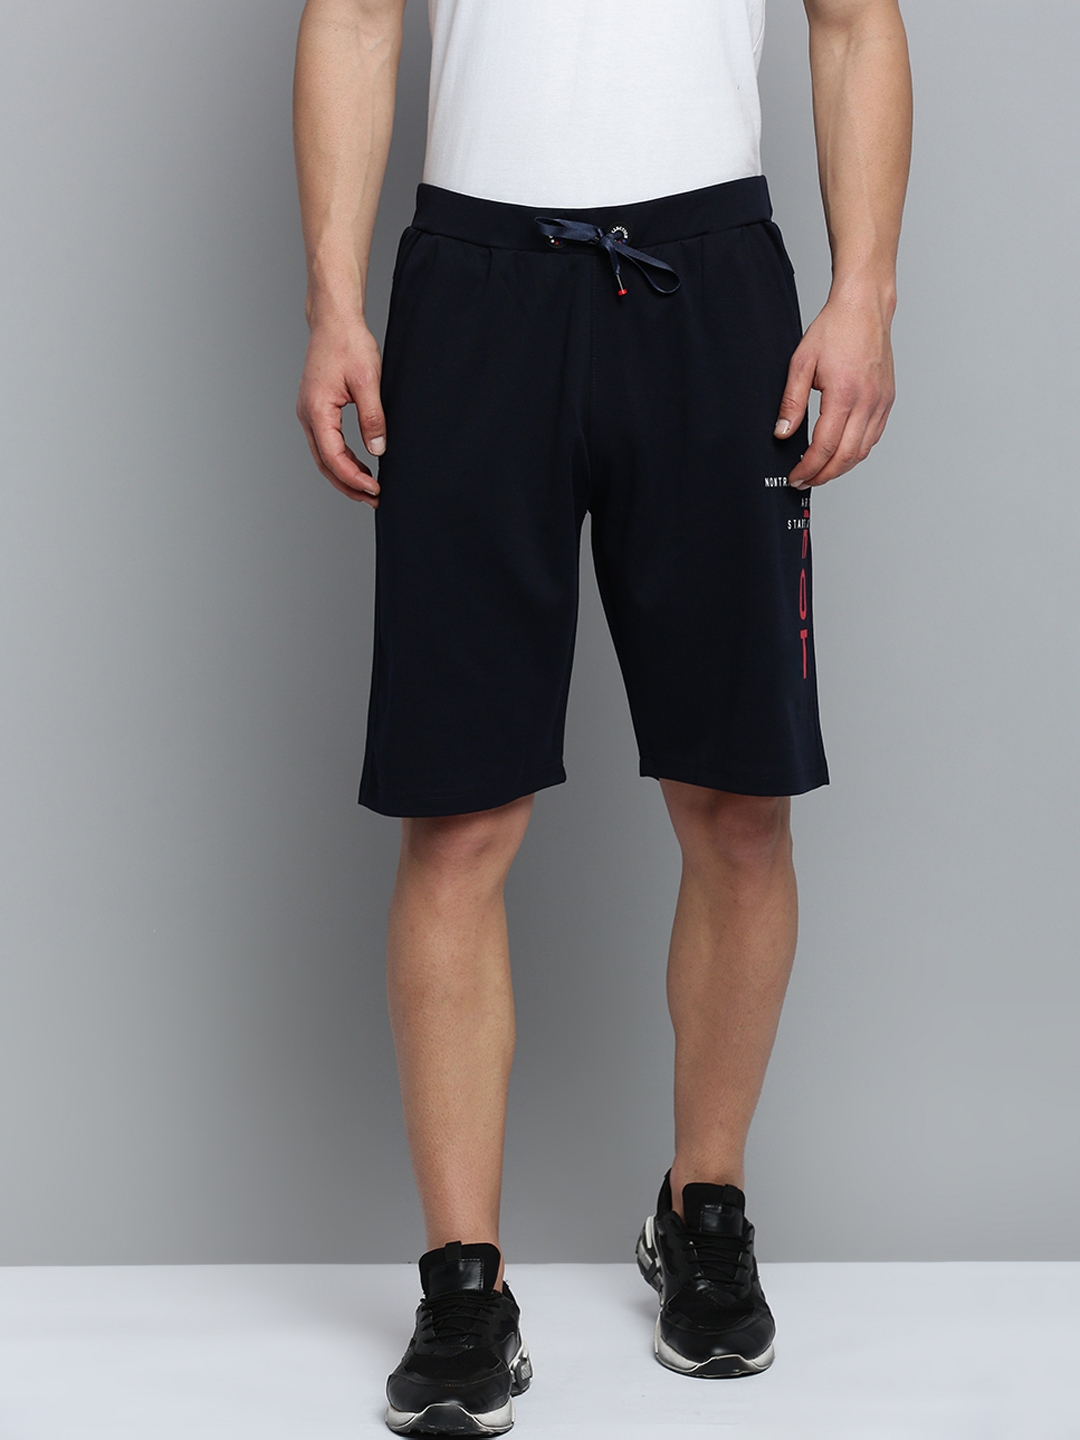 SHOWOFF Men's Solid Navy Blue Knee Length Sports Shorts